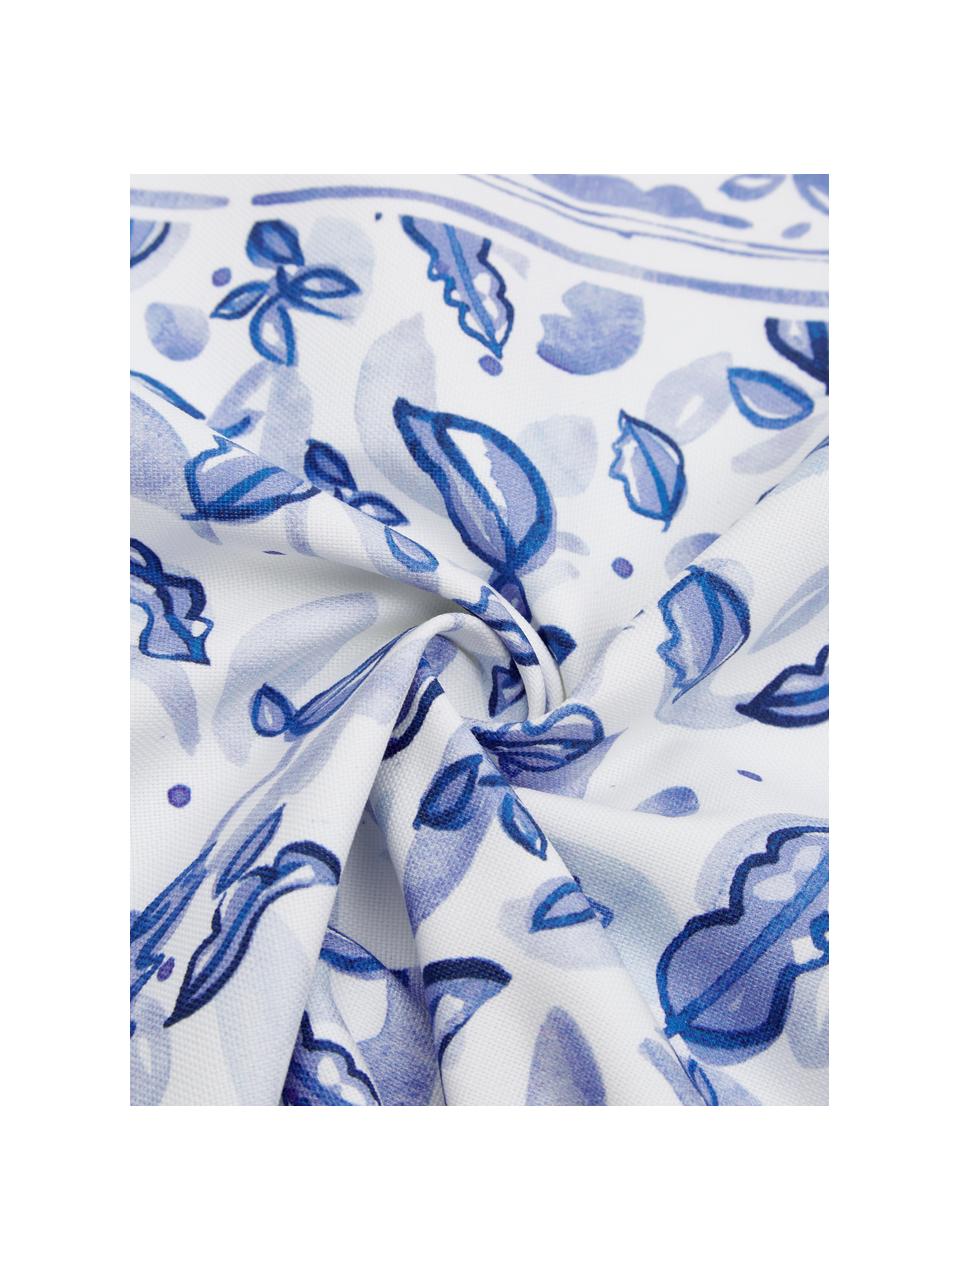 Gemusterte Kissenhülle Andrea aus Baumwolle, 100% Baumwolle, Weiß, Blautöne, B 45 x L 45 cm